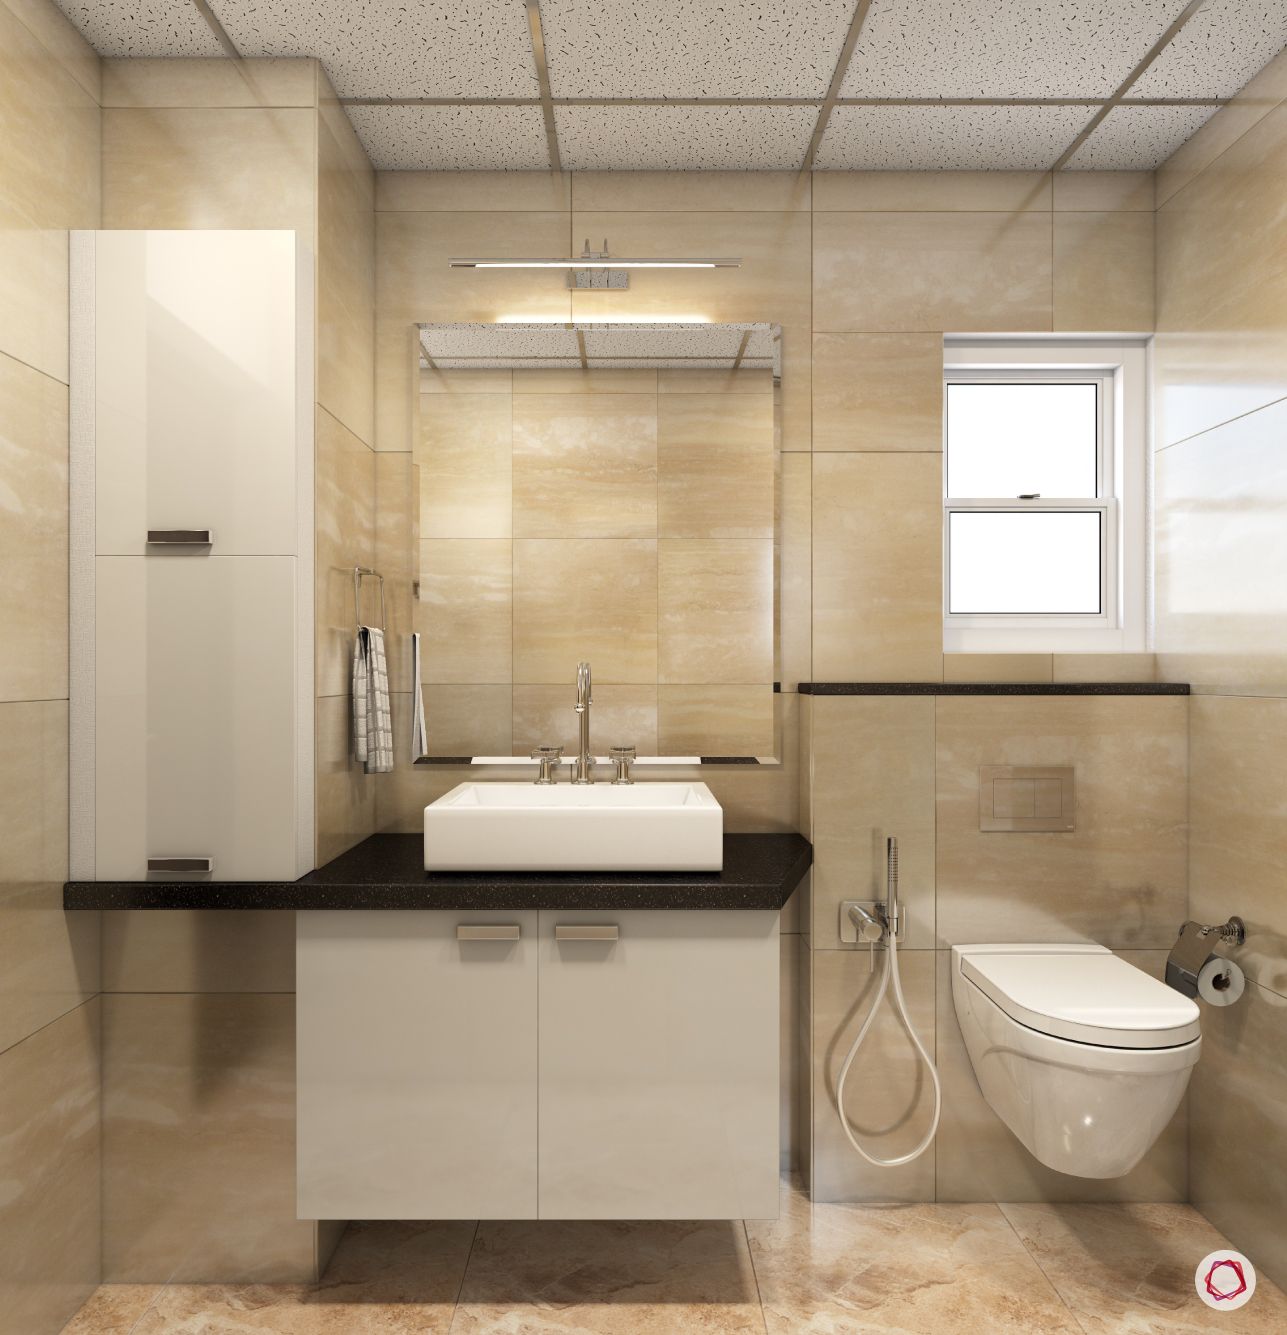 mirror-toilet-beige-tiles-vanity-storage-cabinet-towel